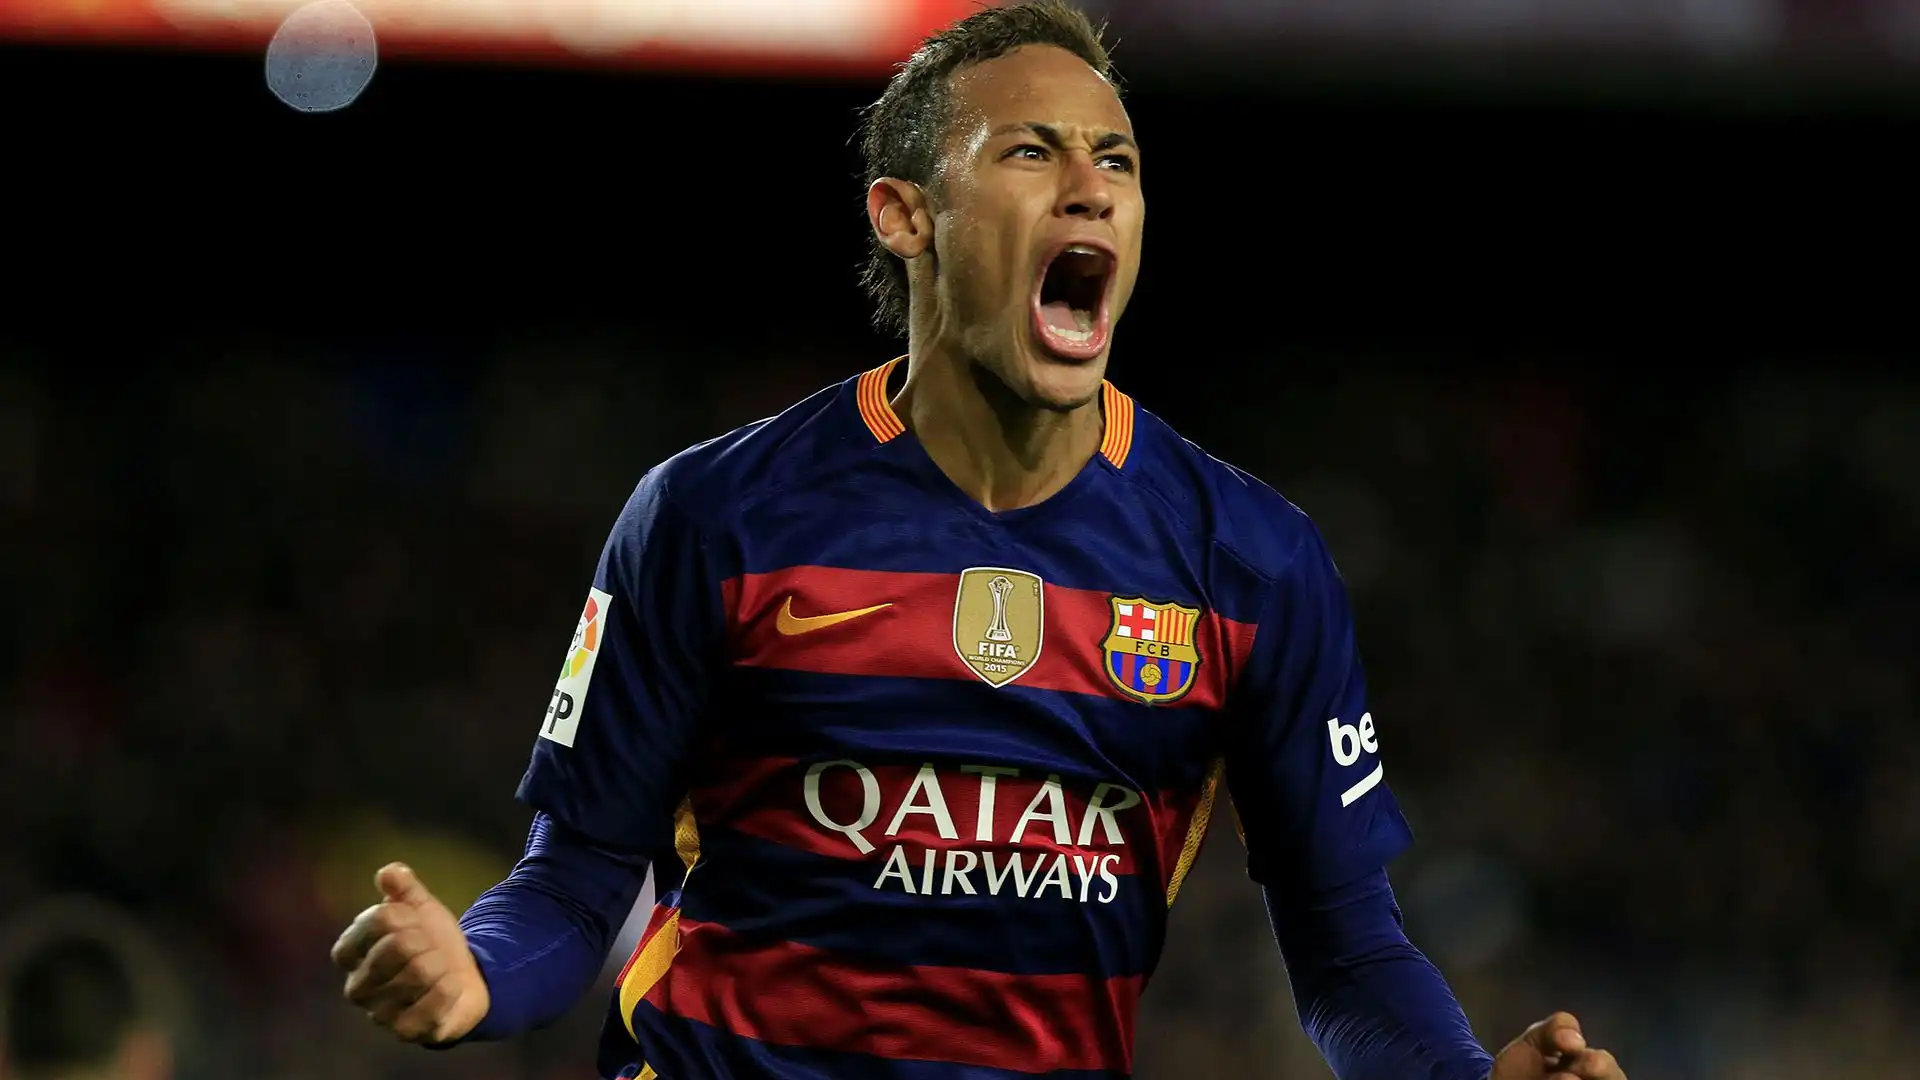 1- Quanti trofei Champions League ha conquistato Neymar?
A- 2
B- 0
C- 1